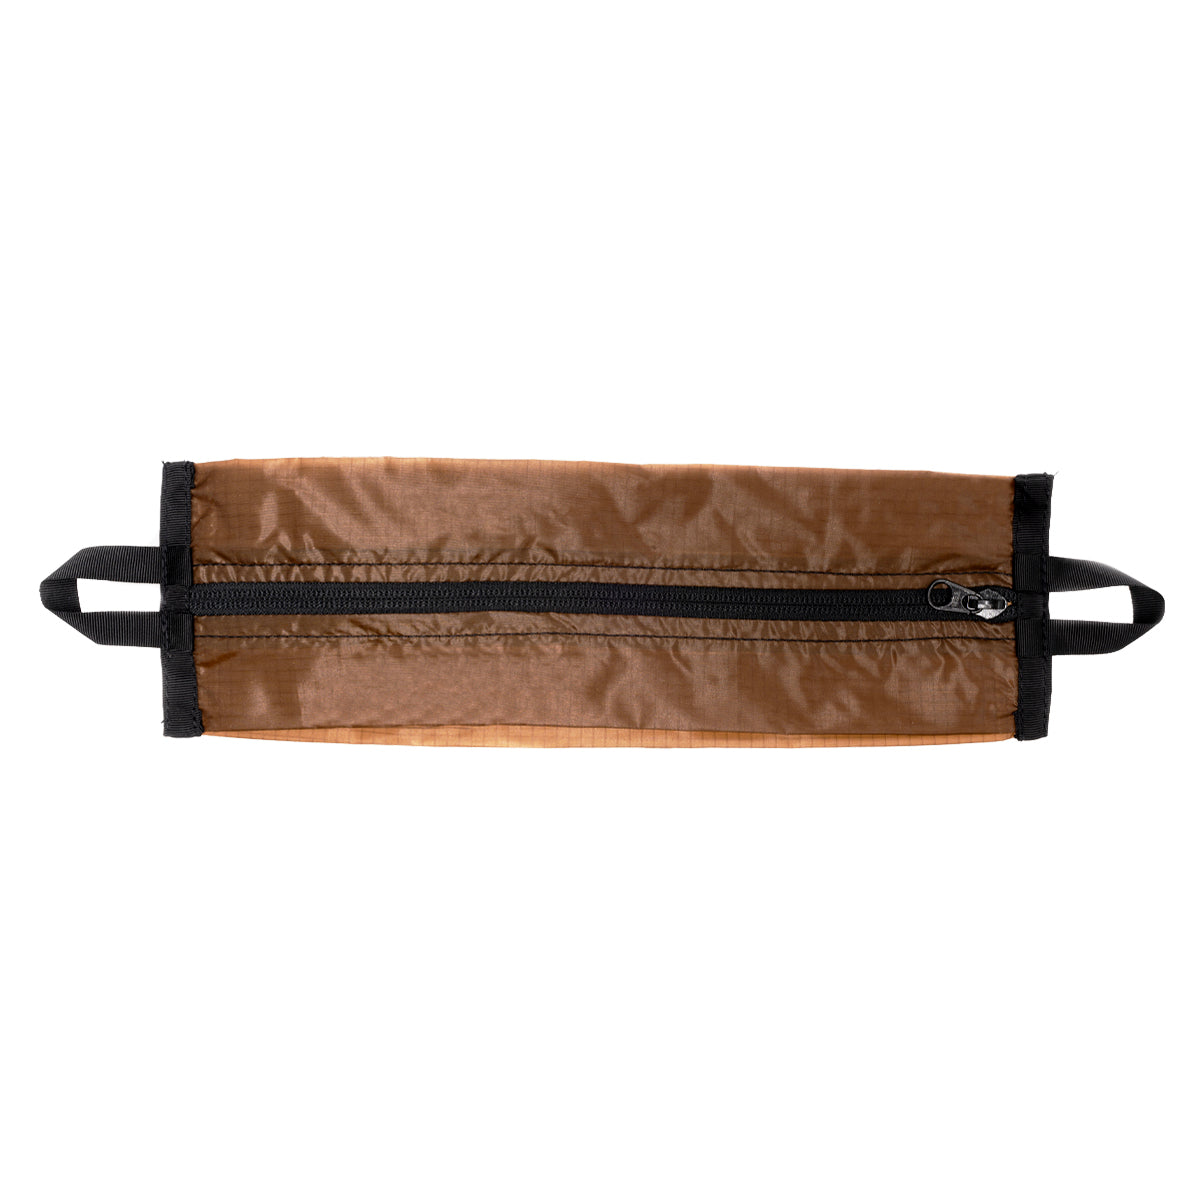 Leather Drawstring Possibles Bag Medium, USA Made